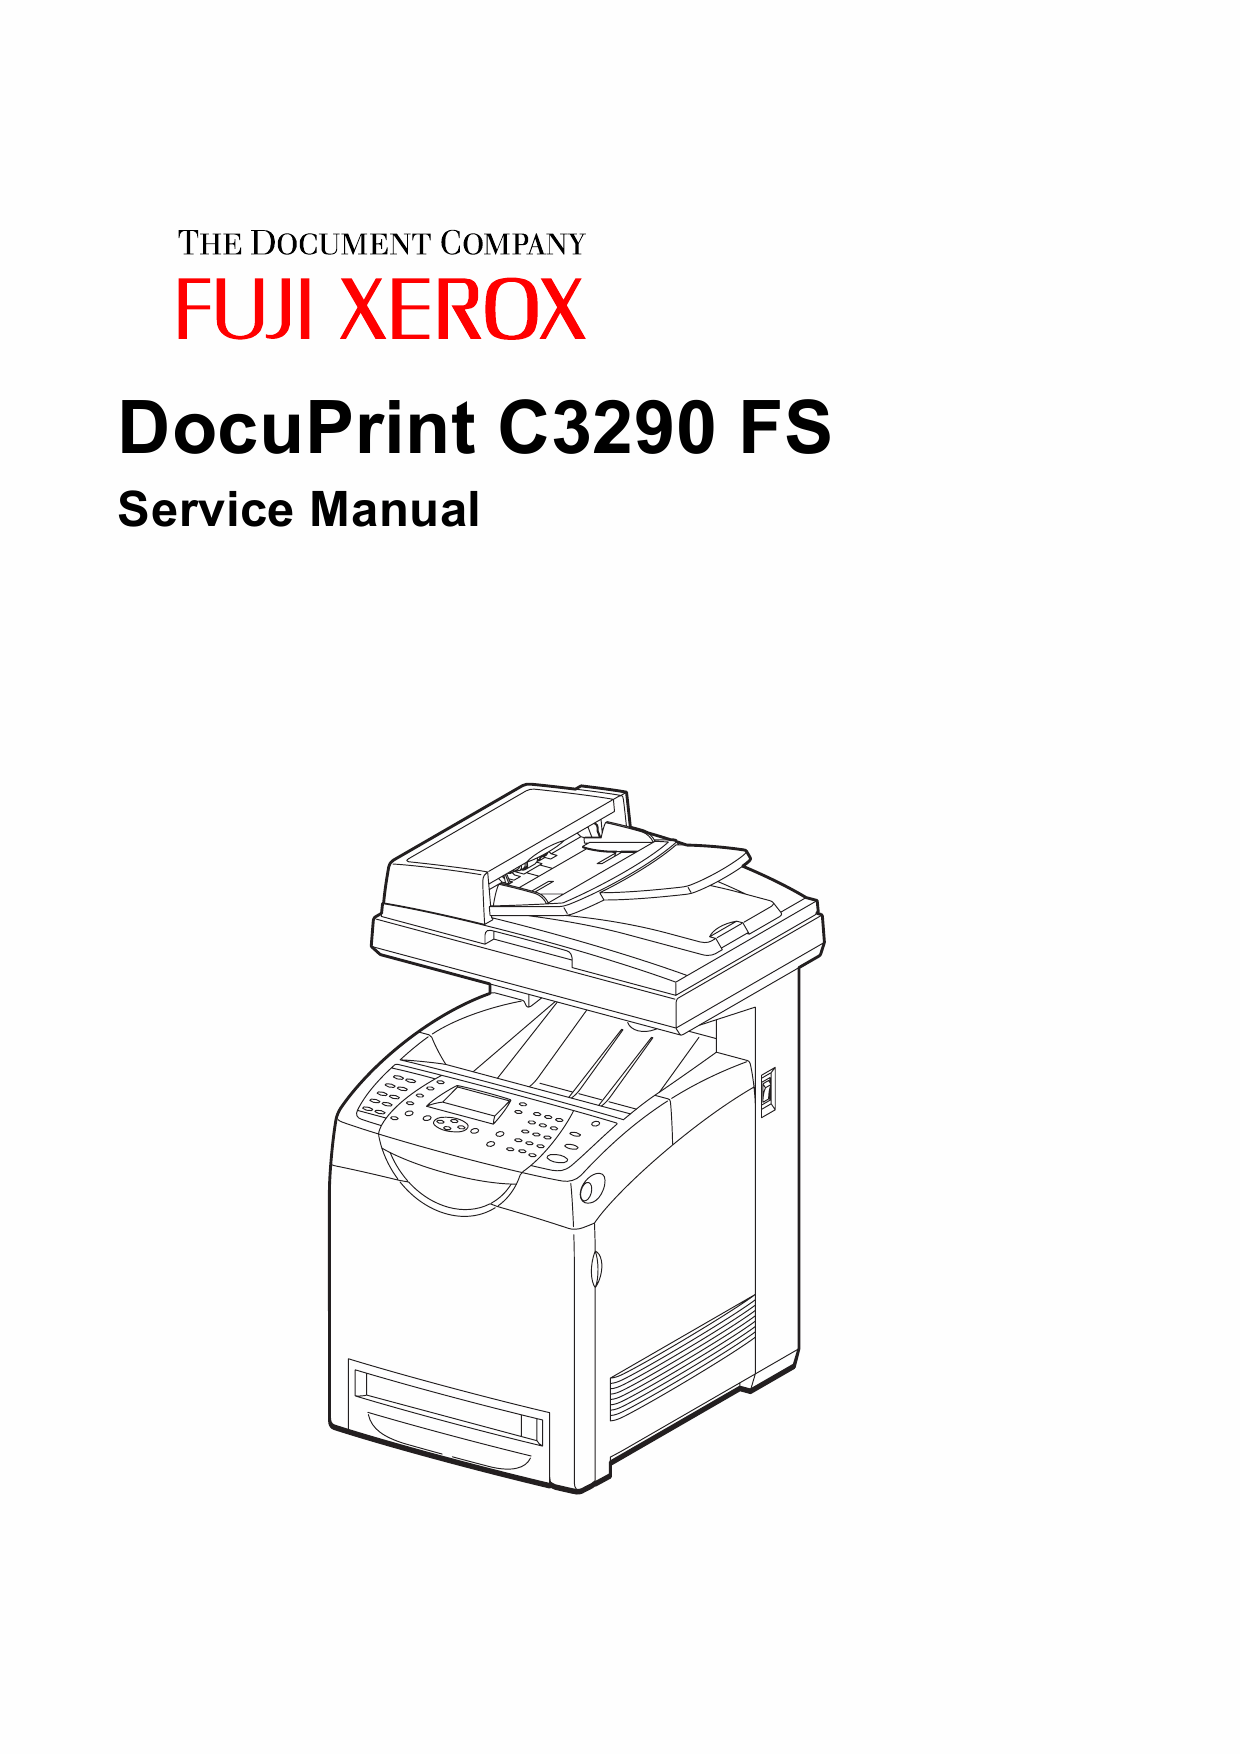 Xerox DocuPrint C3290 FS Fuji Color-MultiFunction-Printer Parts List and Service Manual-1